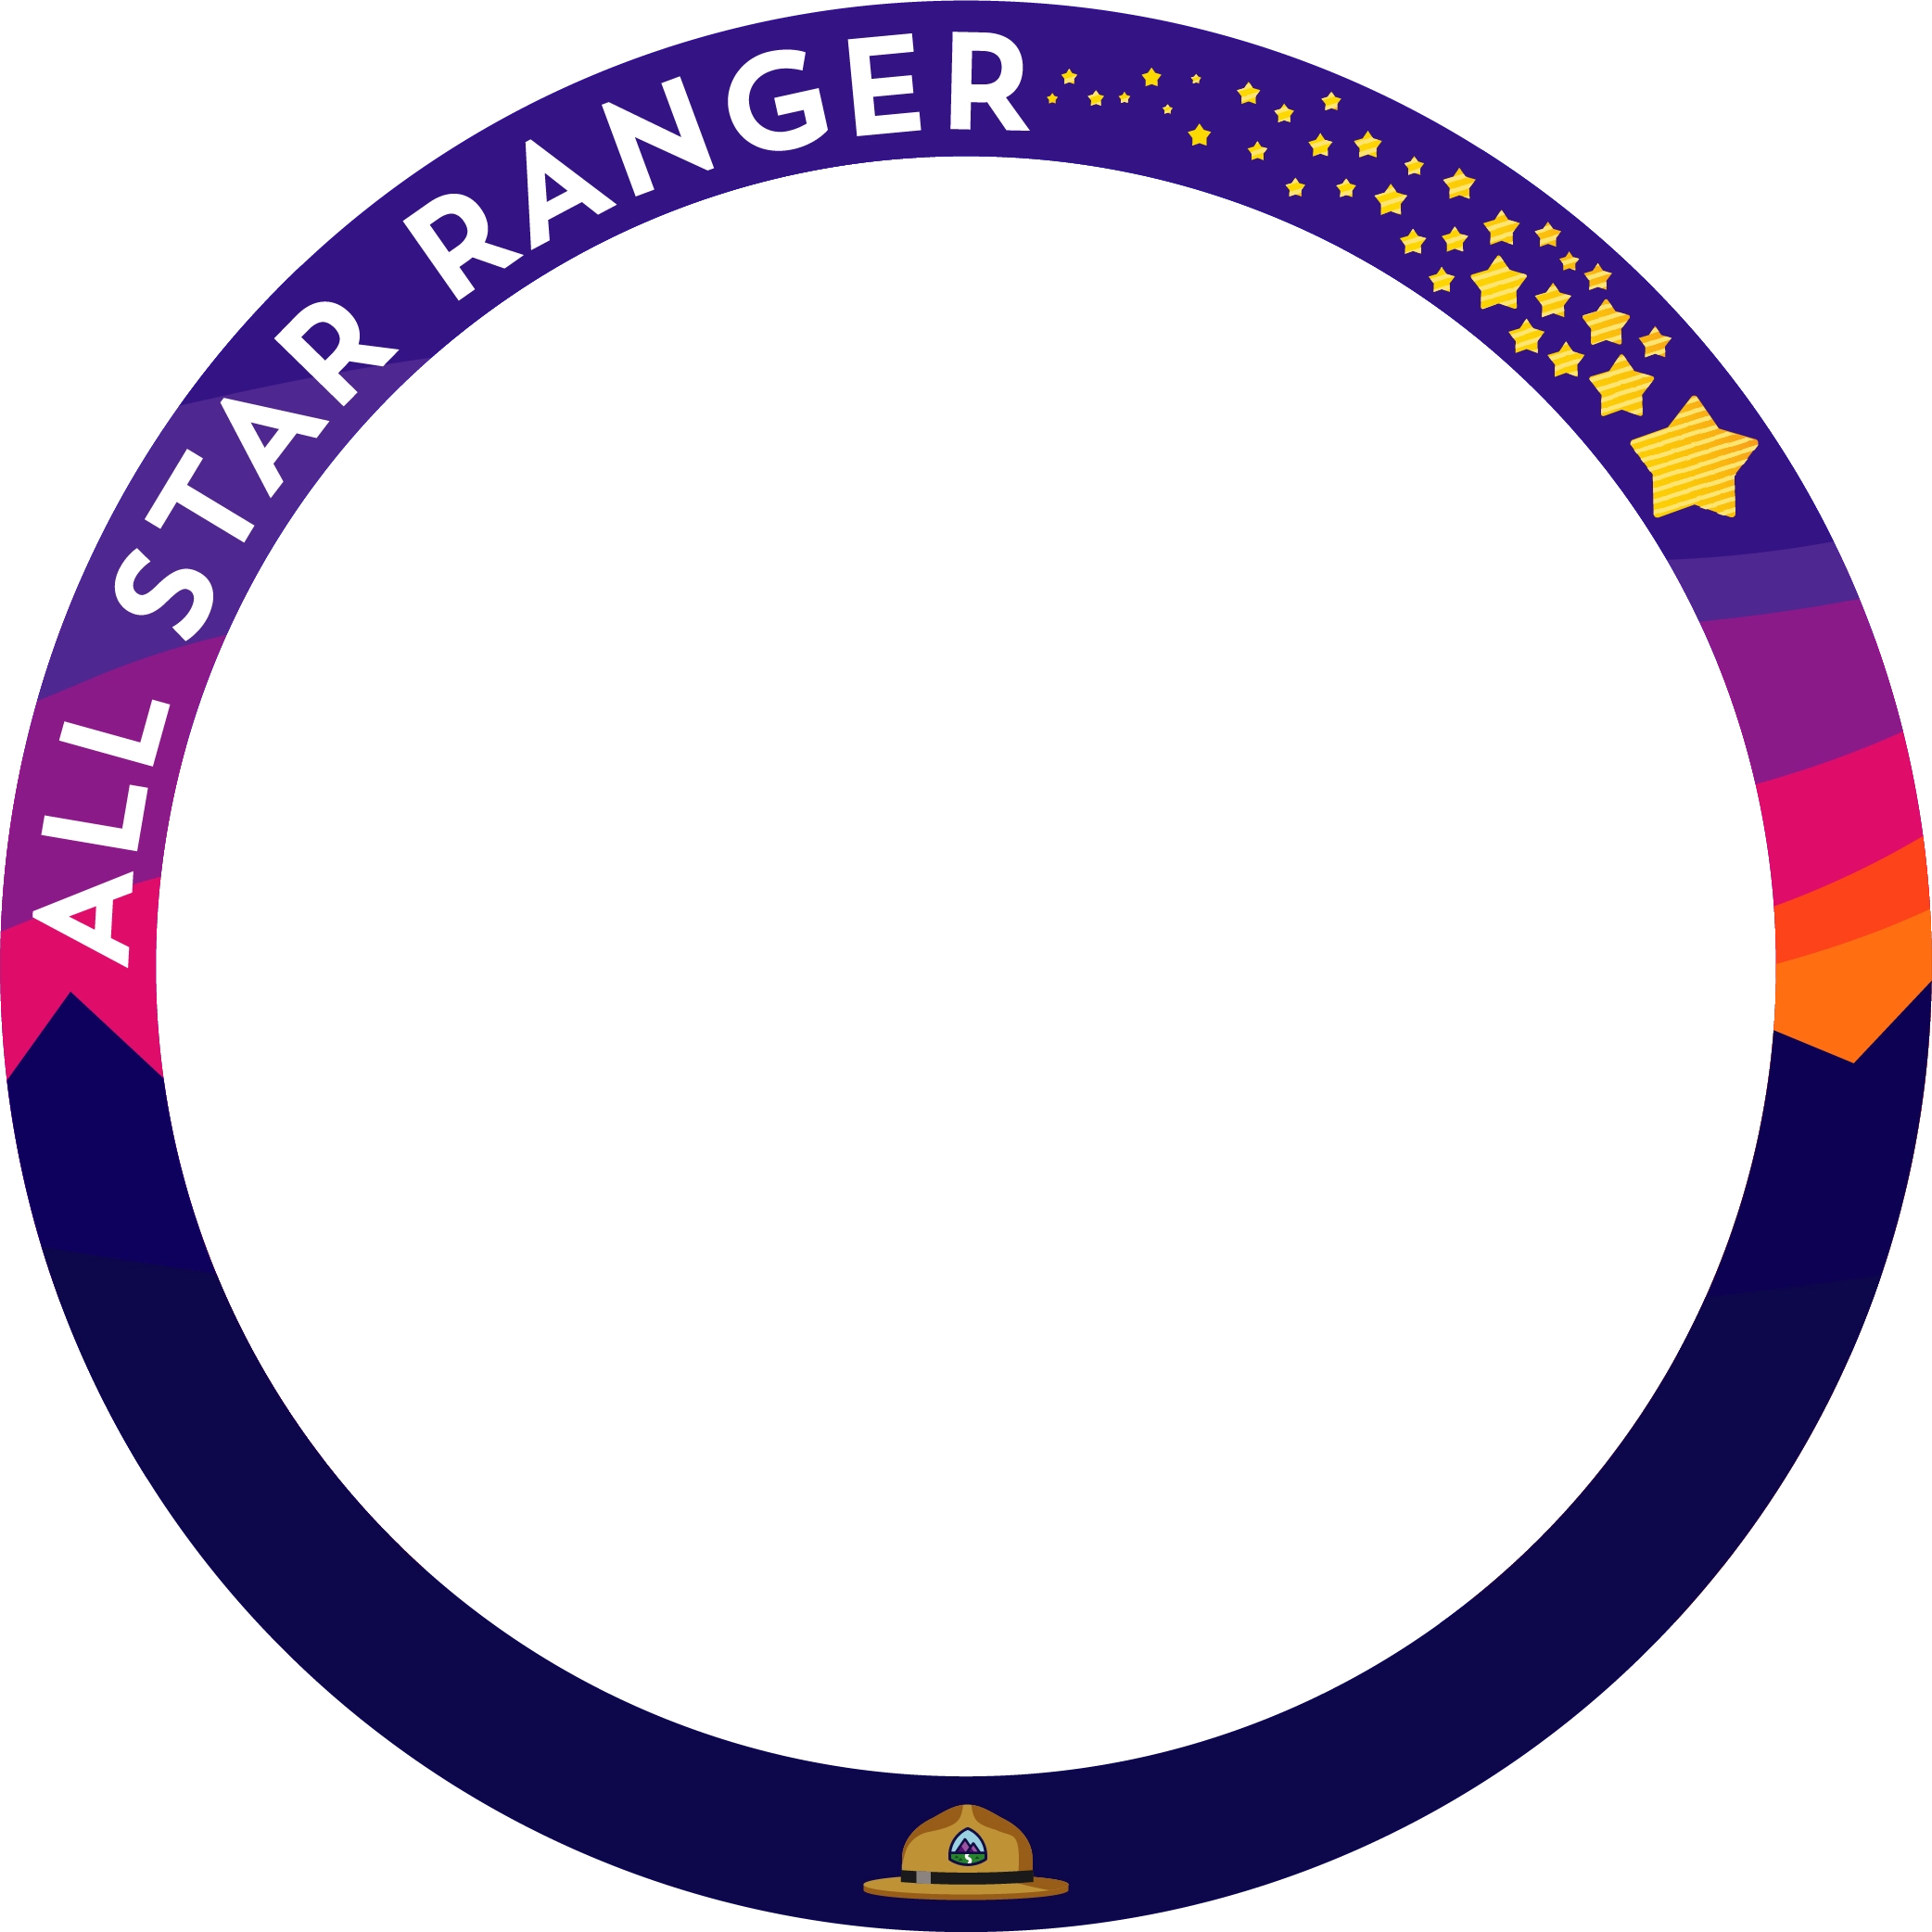 Ranger rank overaly